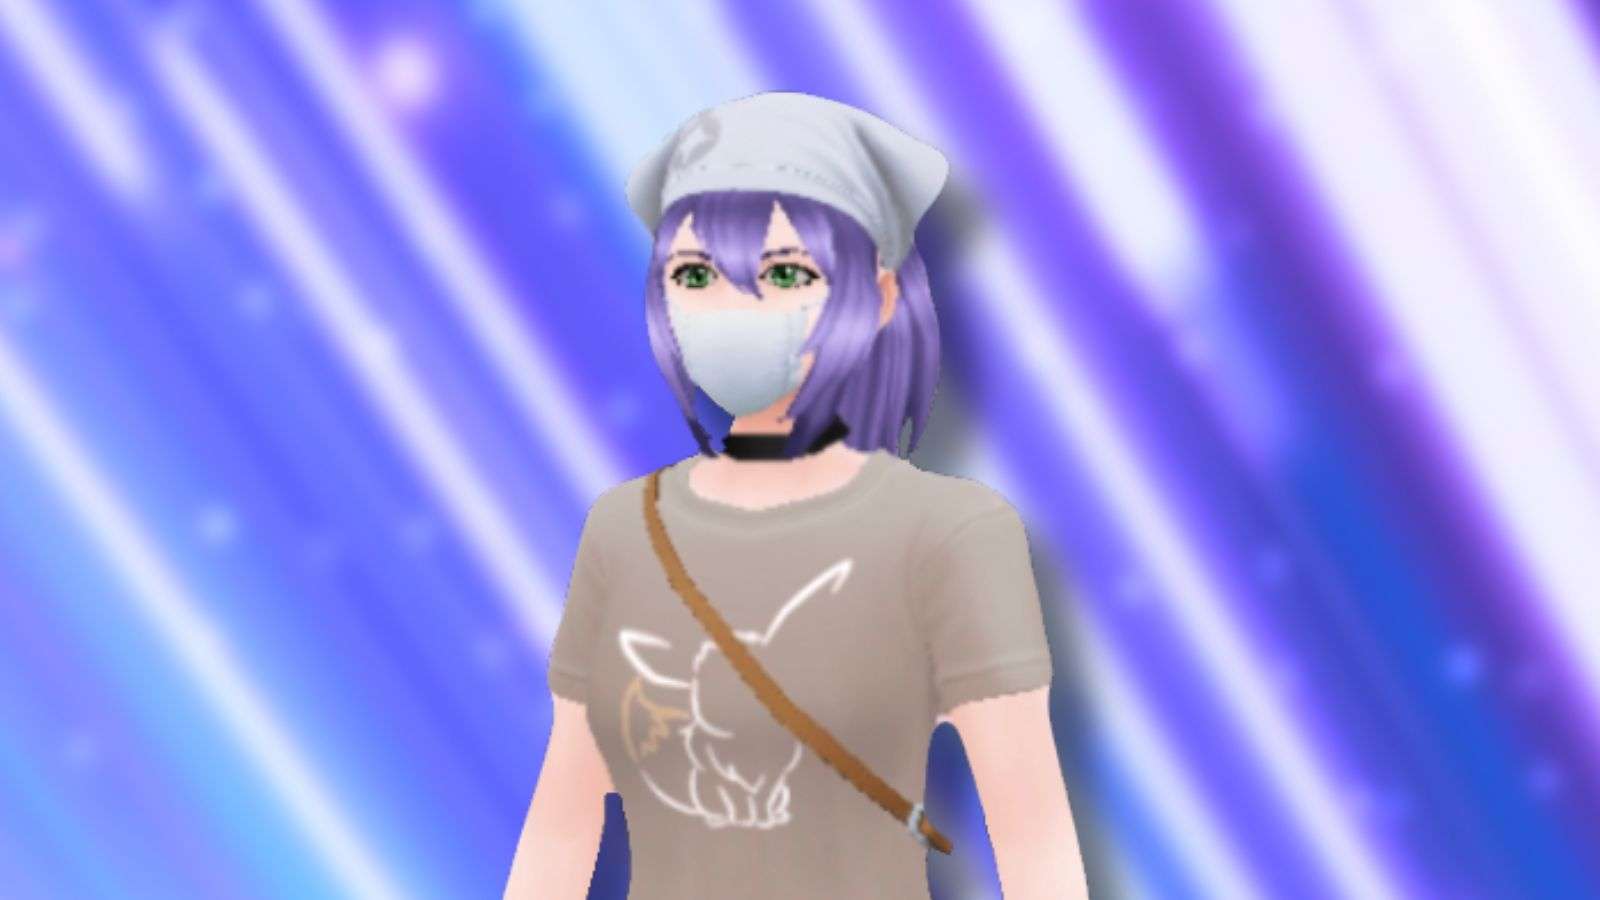 Pokemon Go avatar with stripy background.